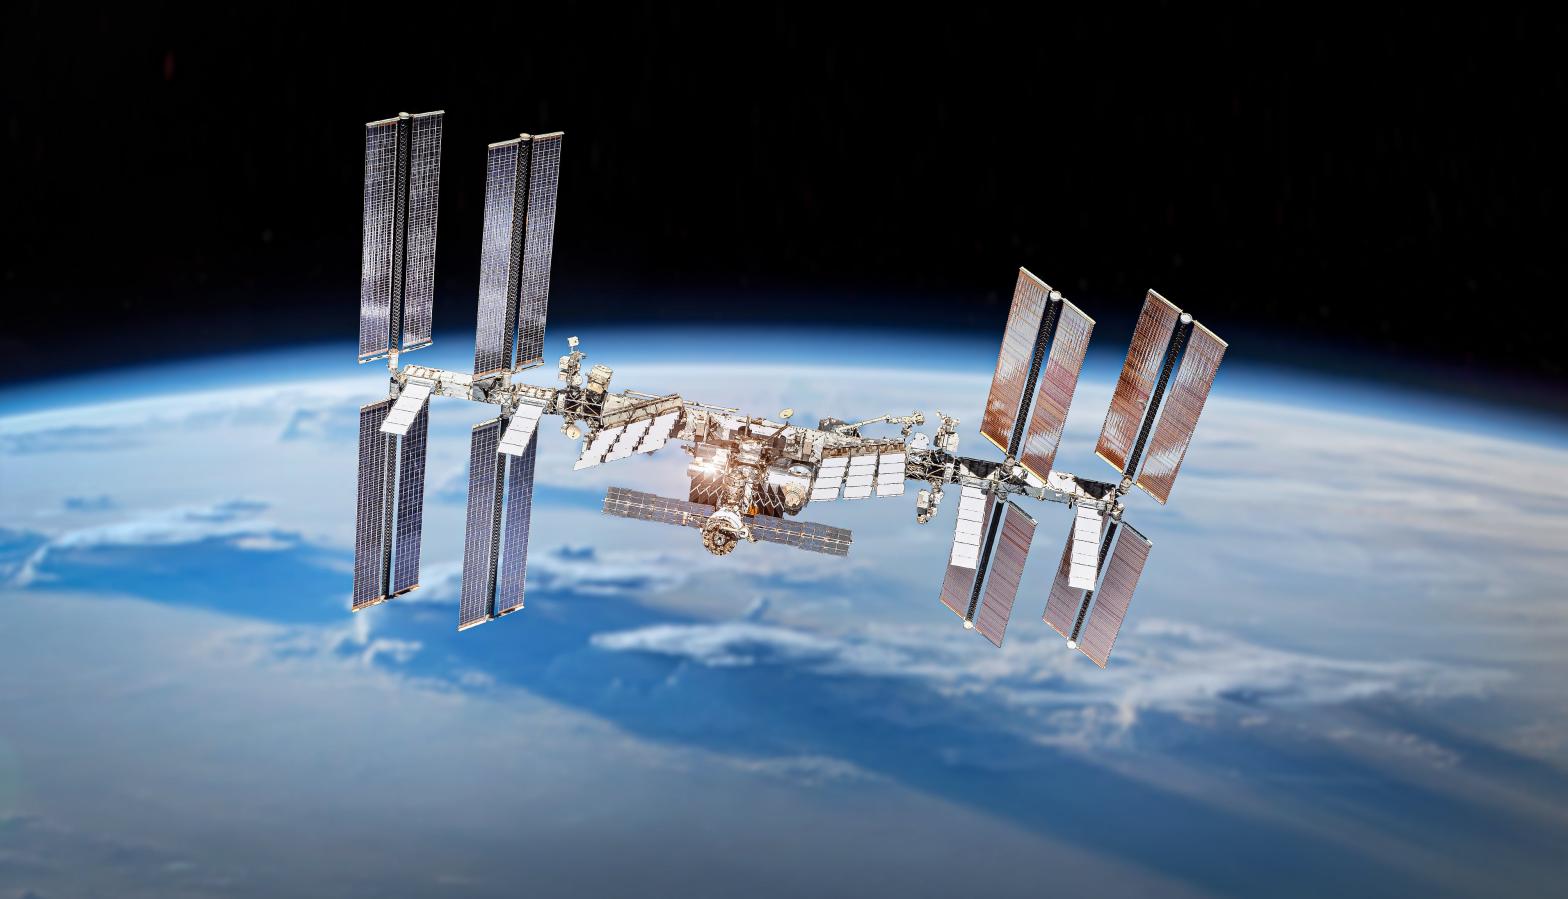 The International Space Station. (Image: Dima Zel, Shutterstock)